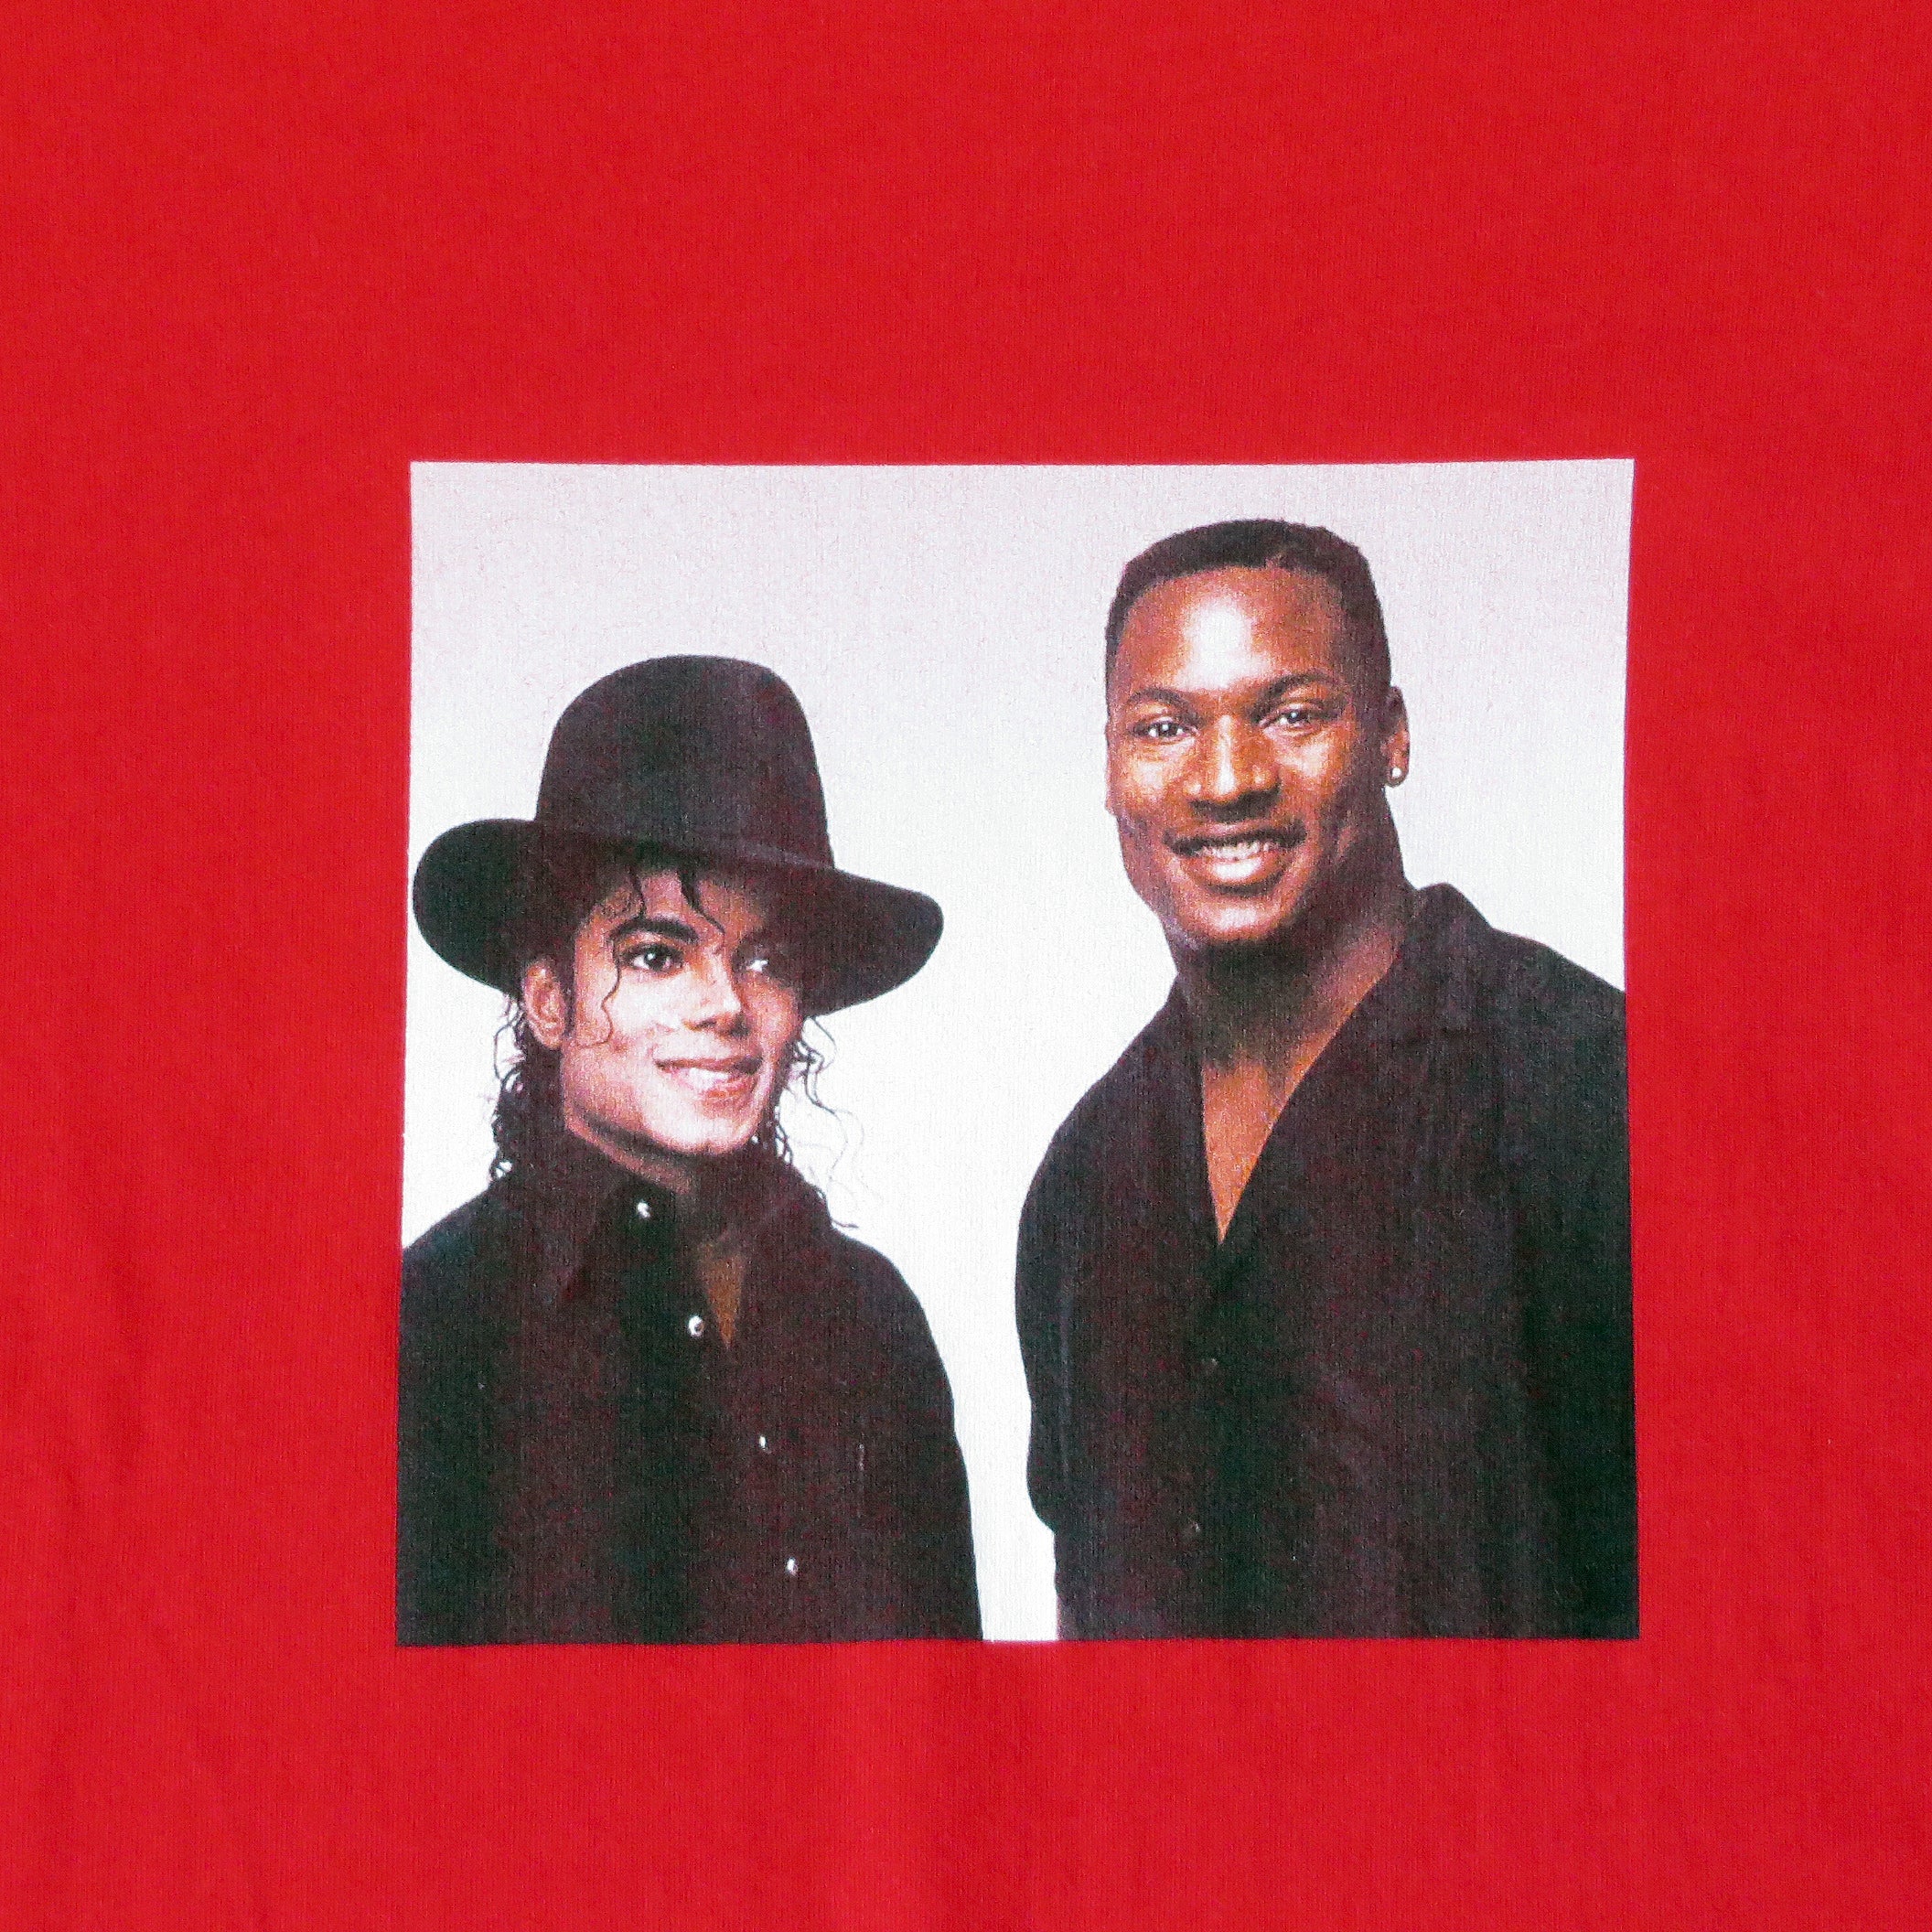 SGMC "The Jacksons" T-Shirt